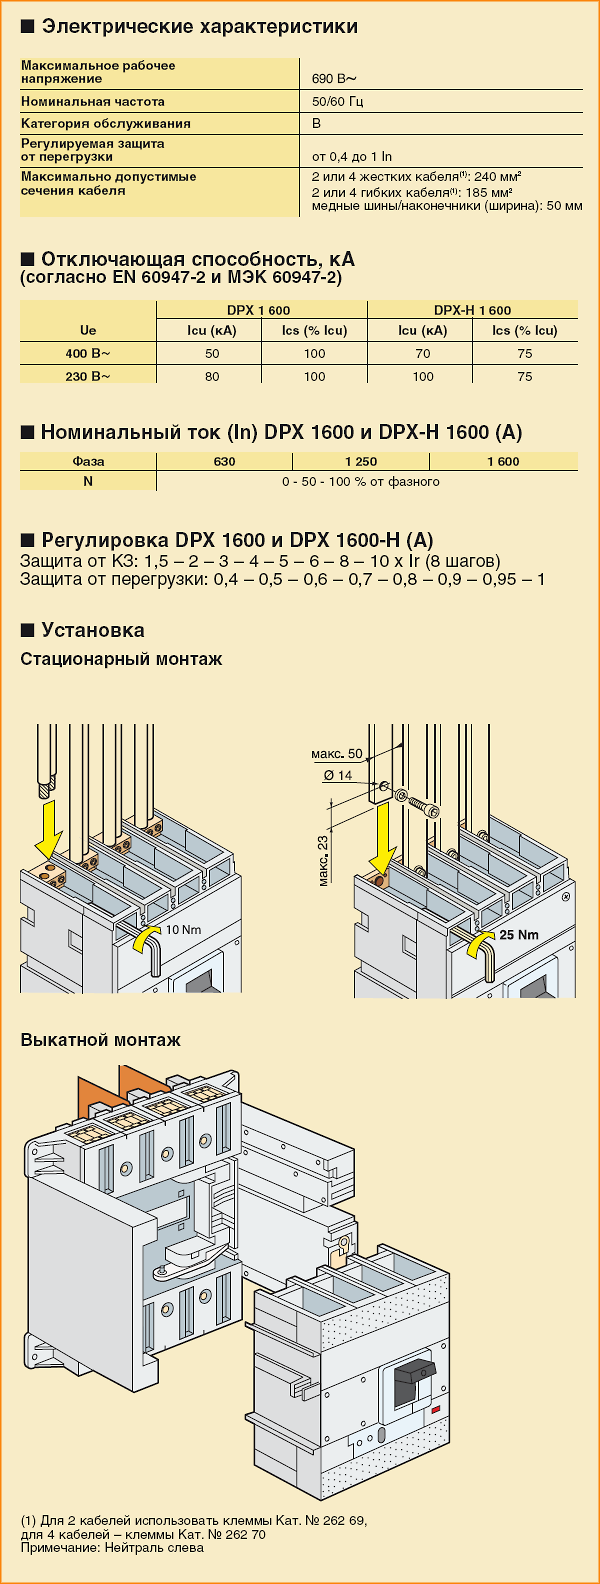 Электрические характеристики и установка DPX 1600 LEGRAND